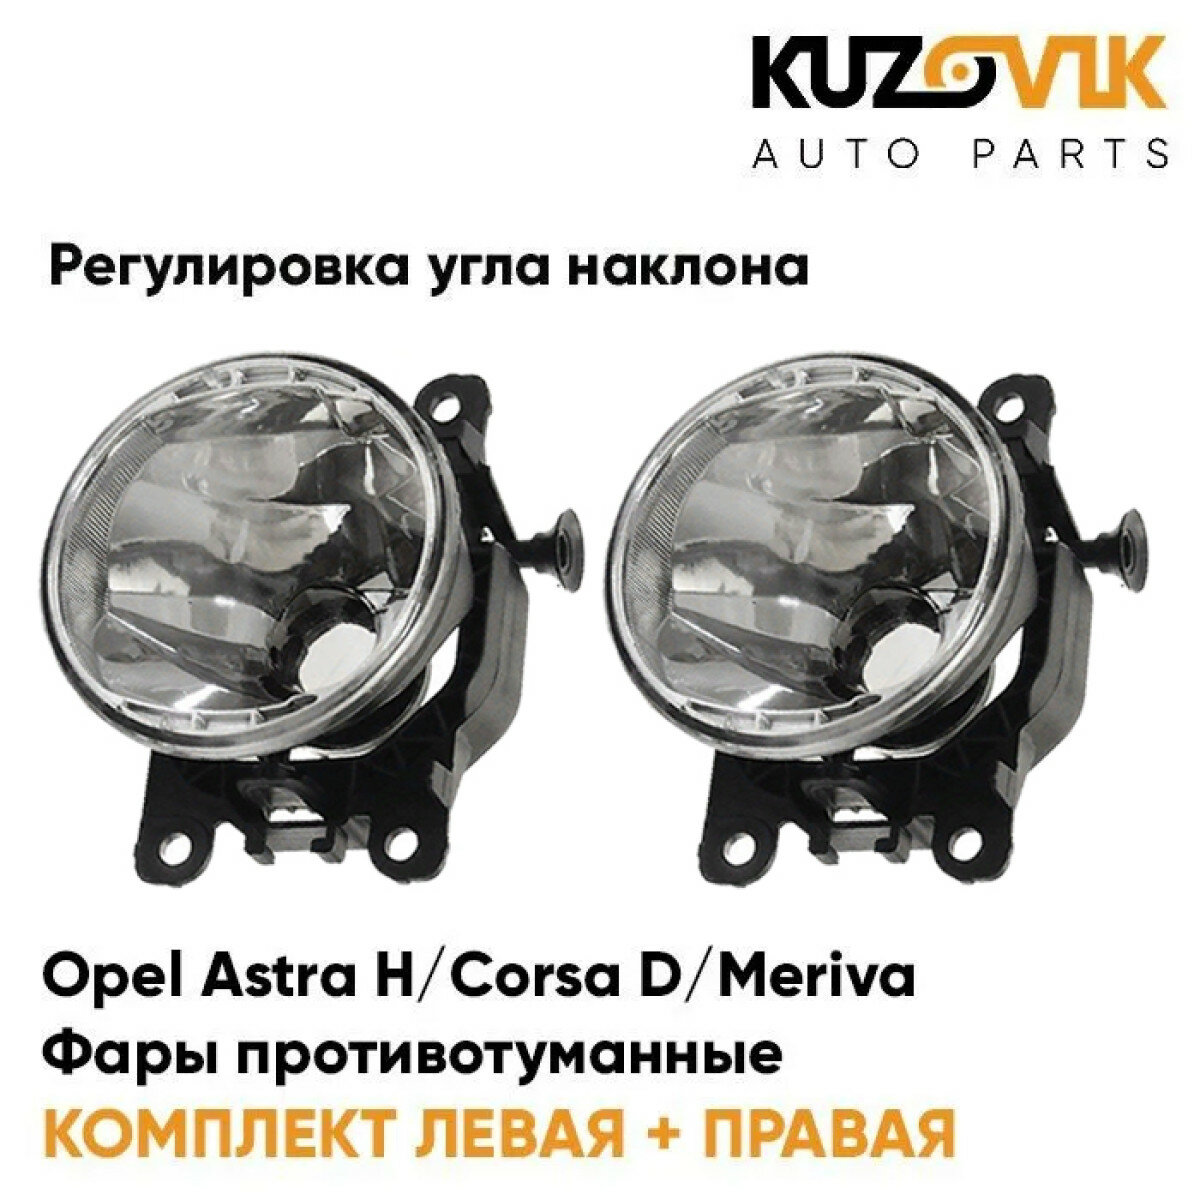 Фары противотуманные комплект Opel Astra H / Corsa D / Meriva / Zafira-B / Vectra-C (2 штуки) с регулировкой угла наклона